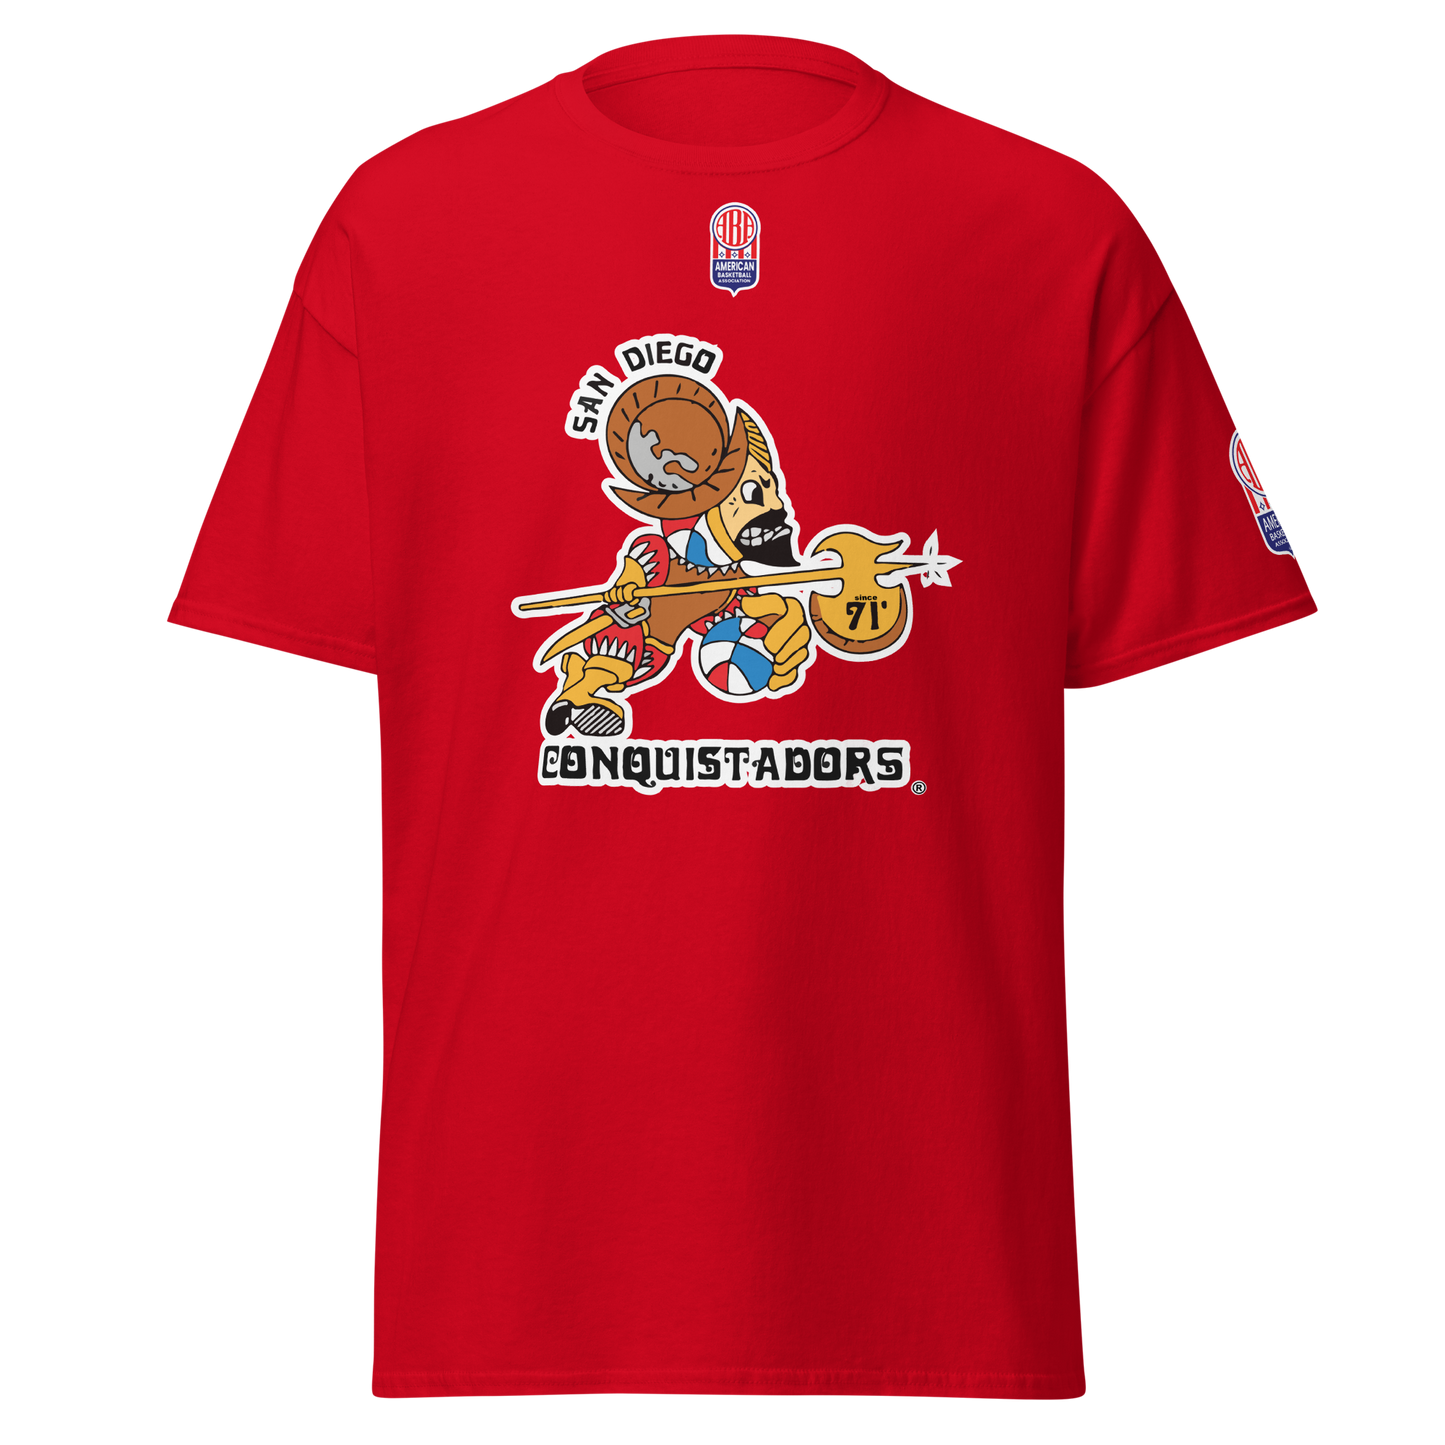 San Diego Conquistadors Oldschool ABA T-Shirt! 🏀✨